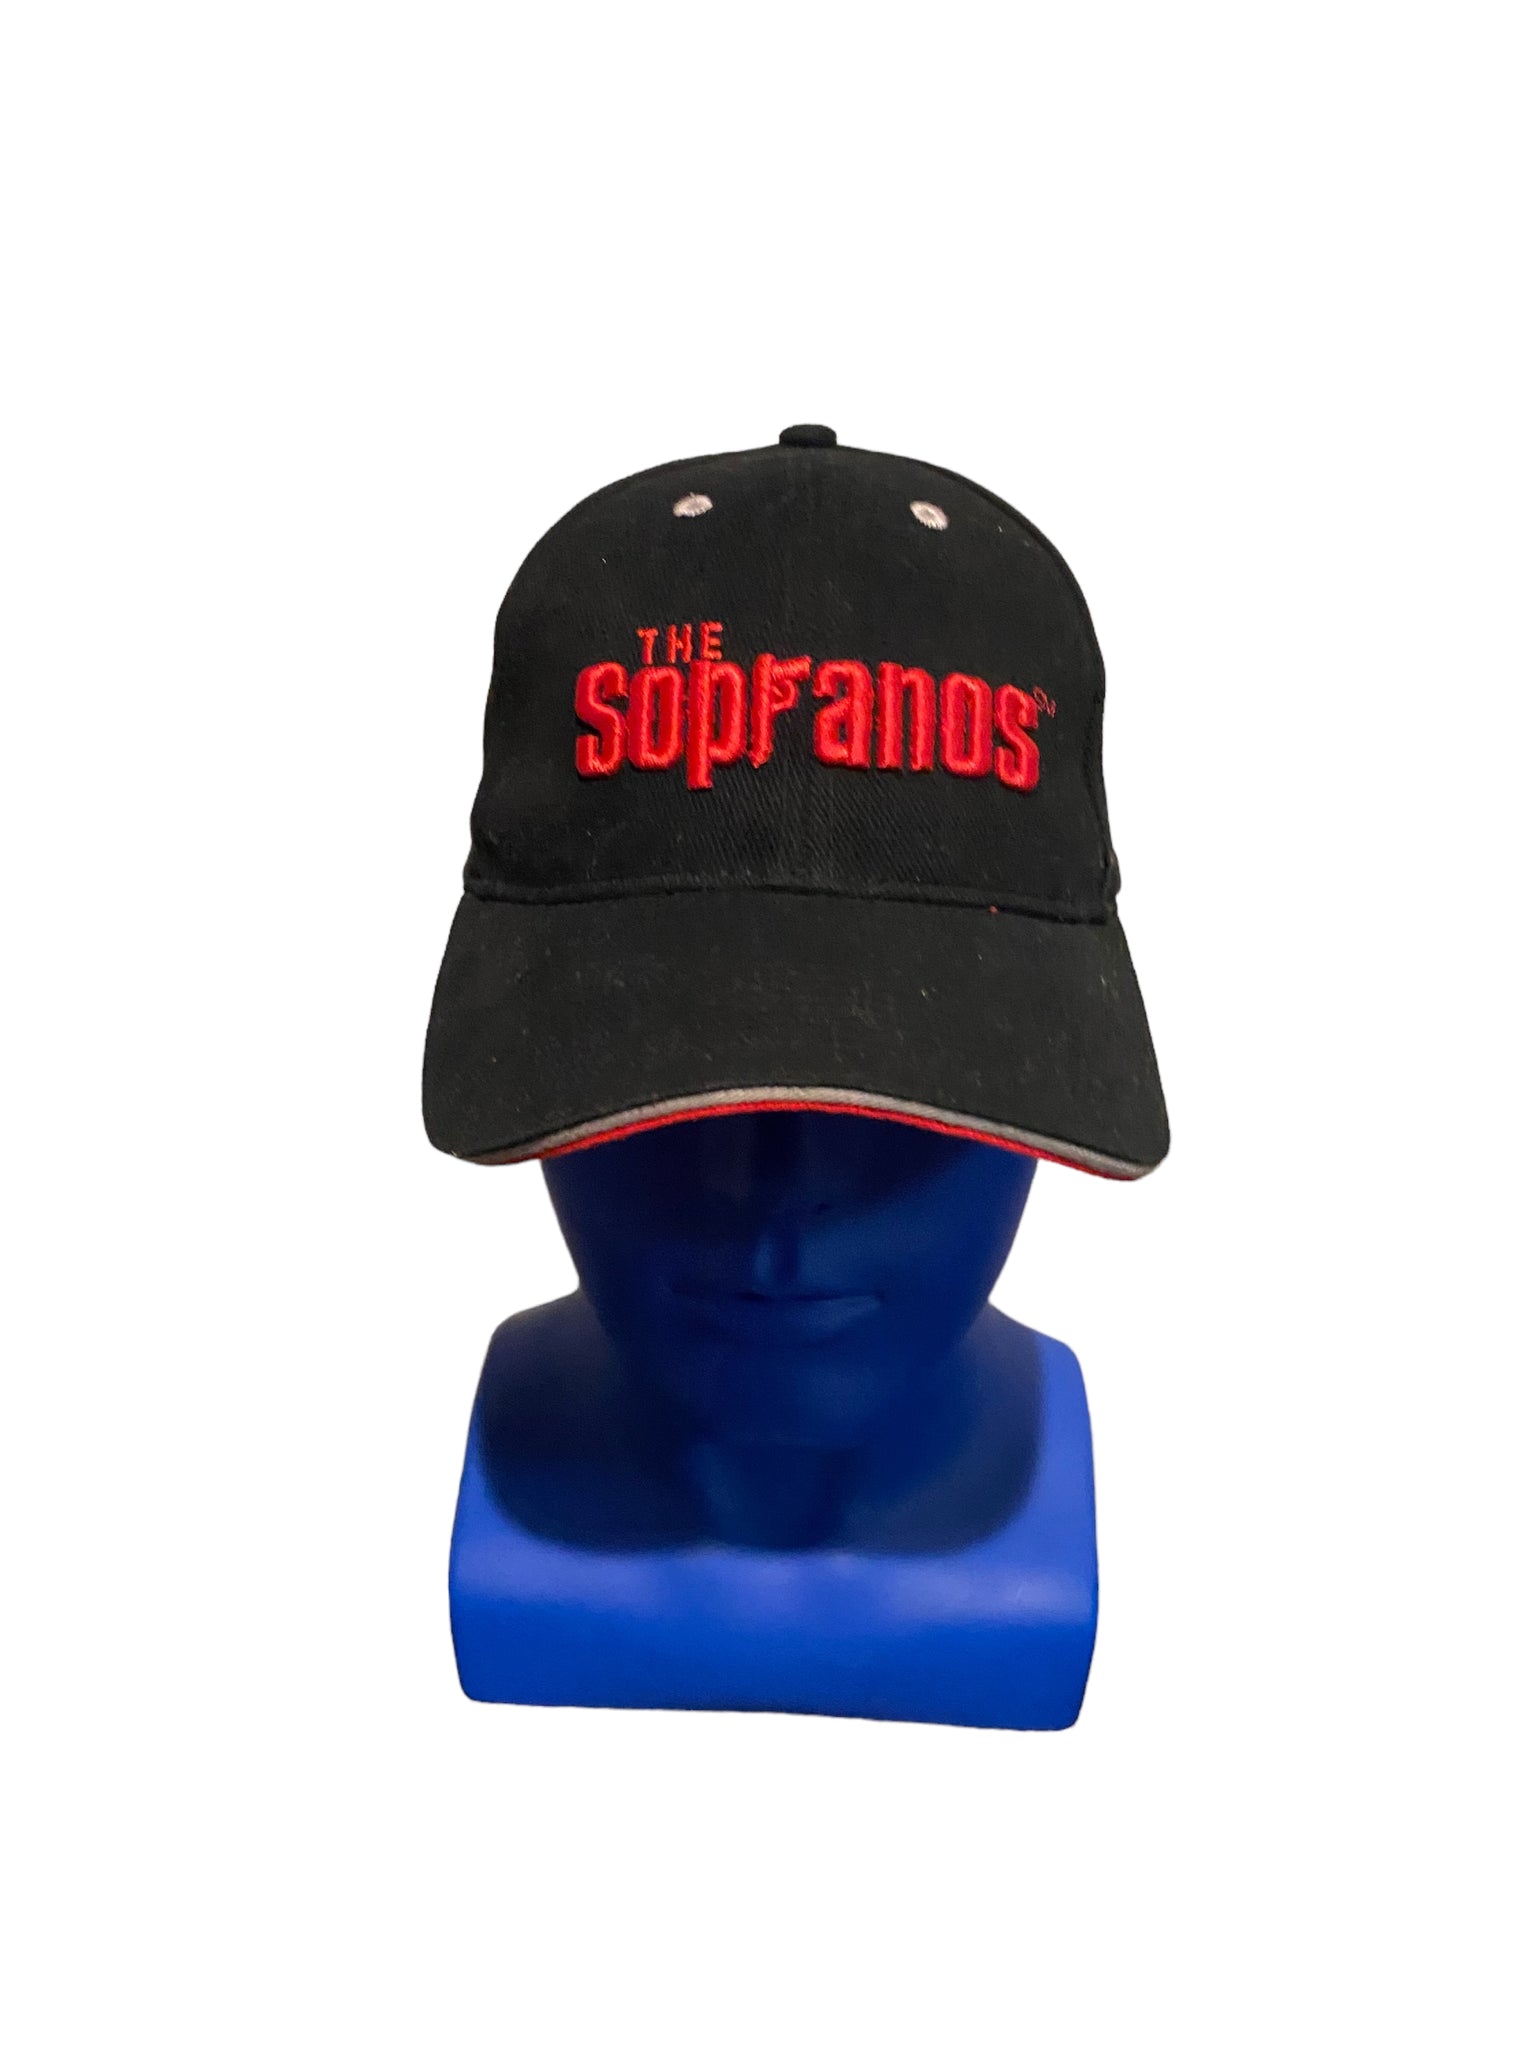 Vintage The Sopranos HBO flexfit Dad Cap Hat Black Red Embroidered 90s